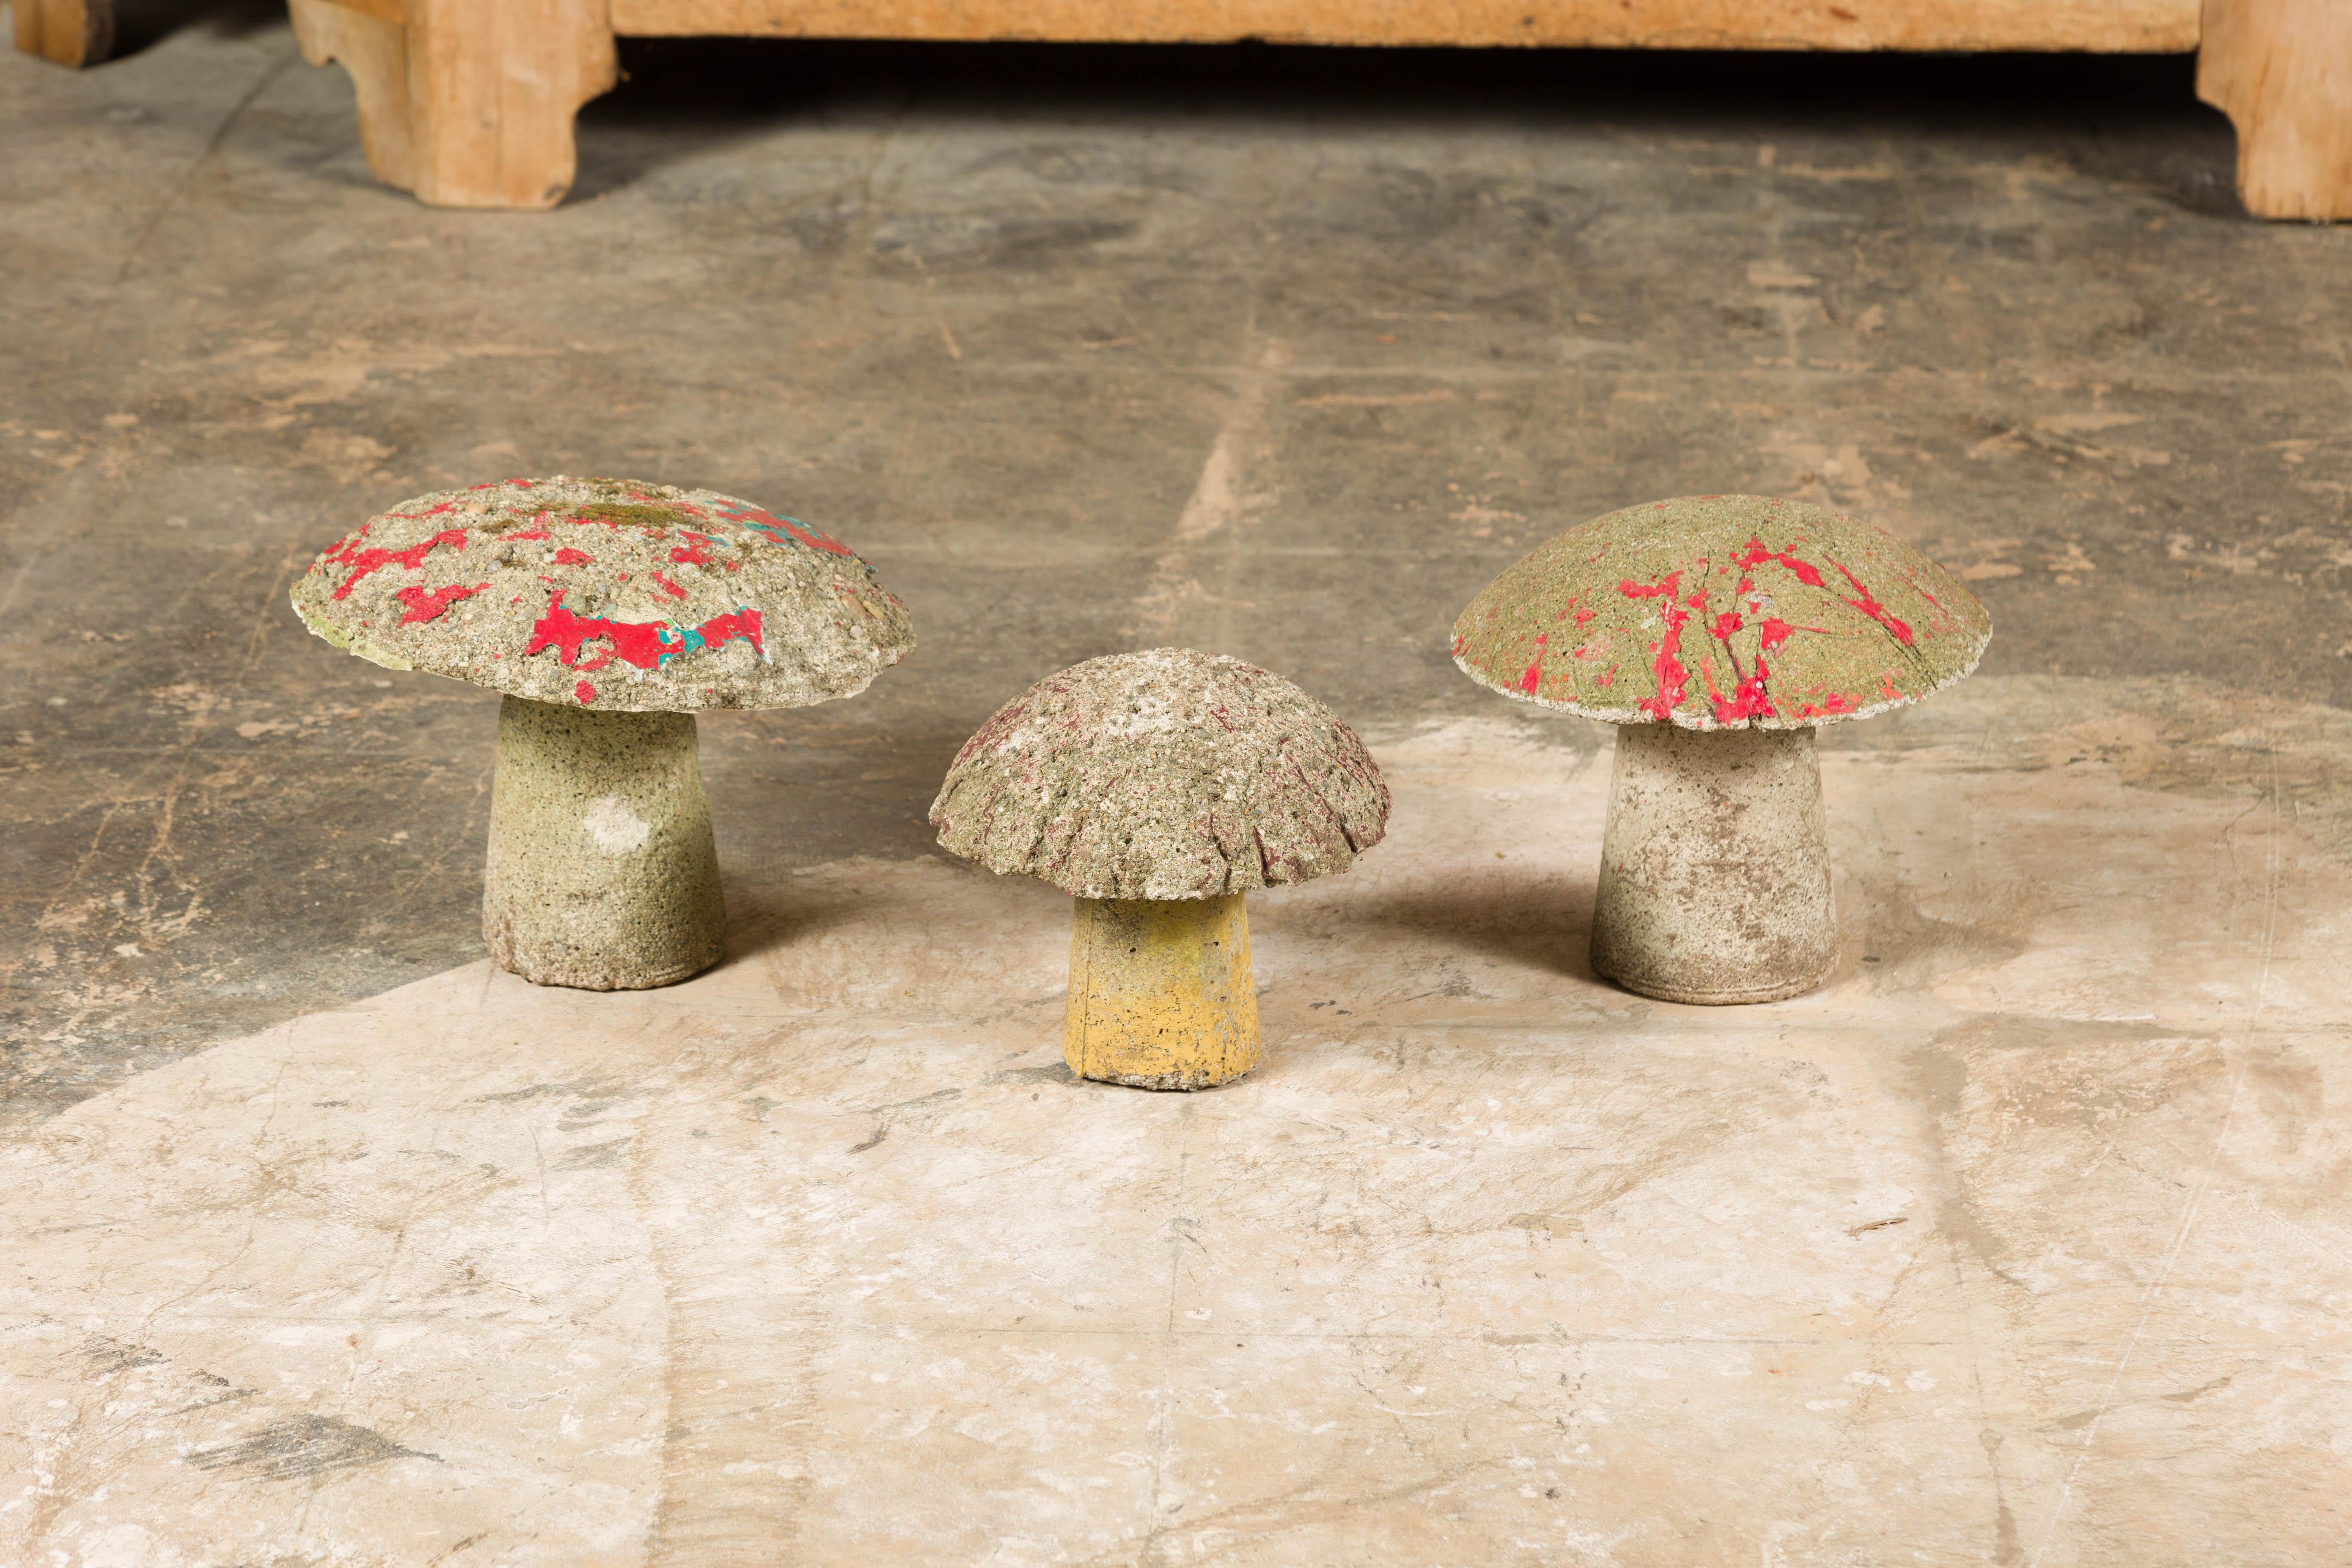 Set of Three American Midcentury Painted Concrete Mushroom Garden Ornaments In Good Condition For Sale In Atlanta, GA